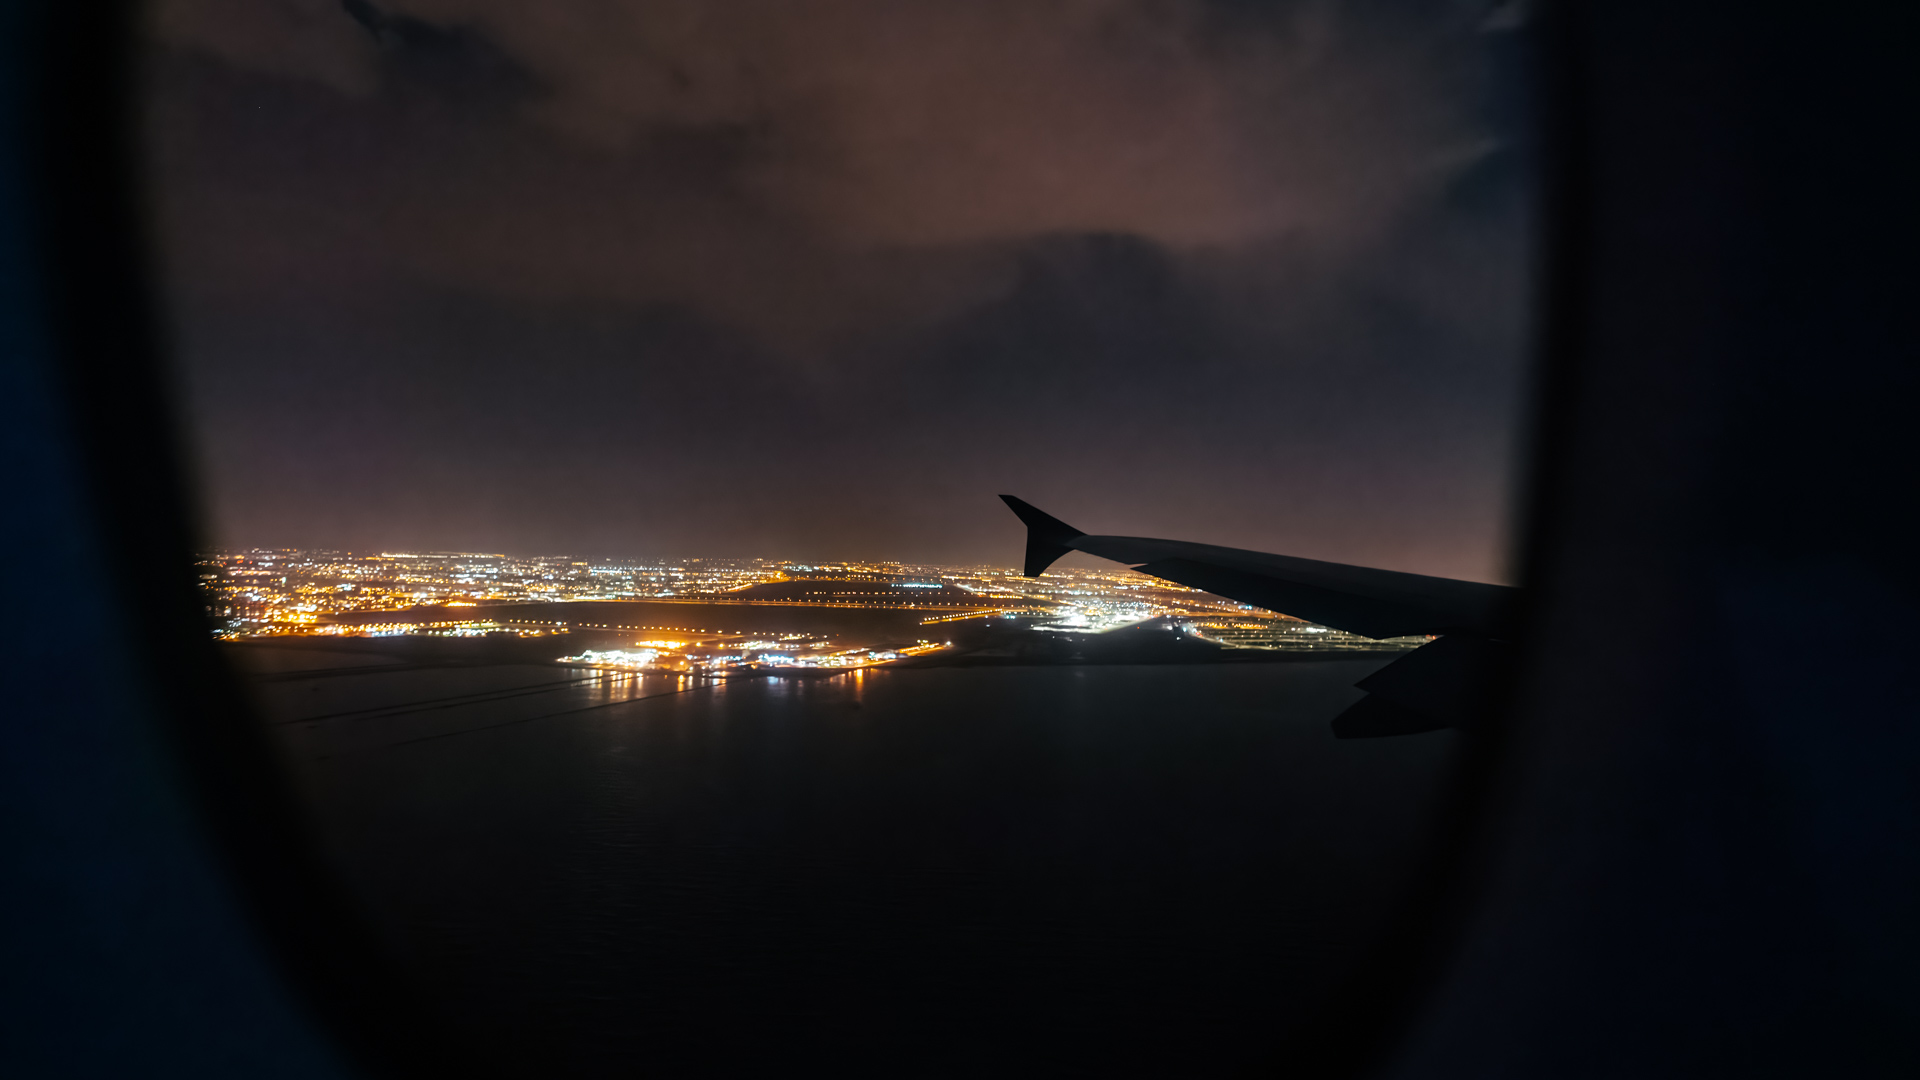 Qatar Airways Airbus A380 Economy view of Doha